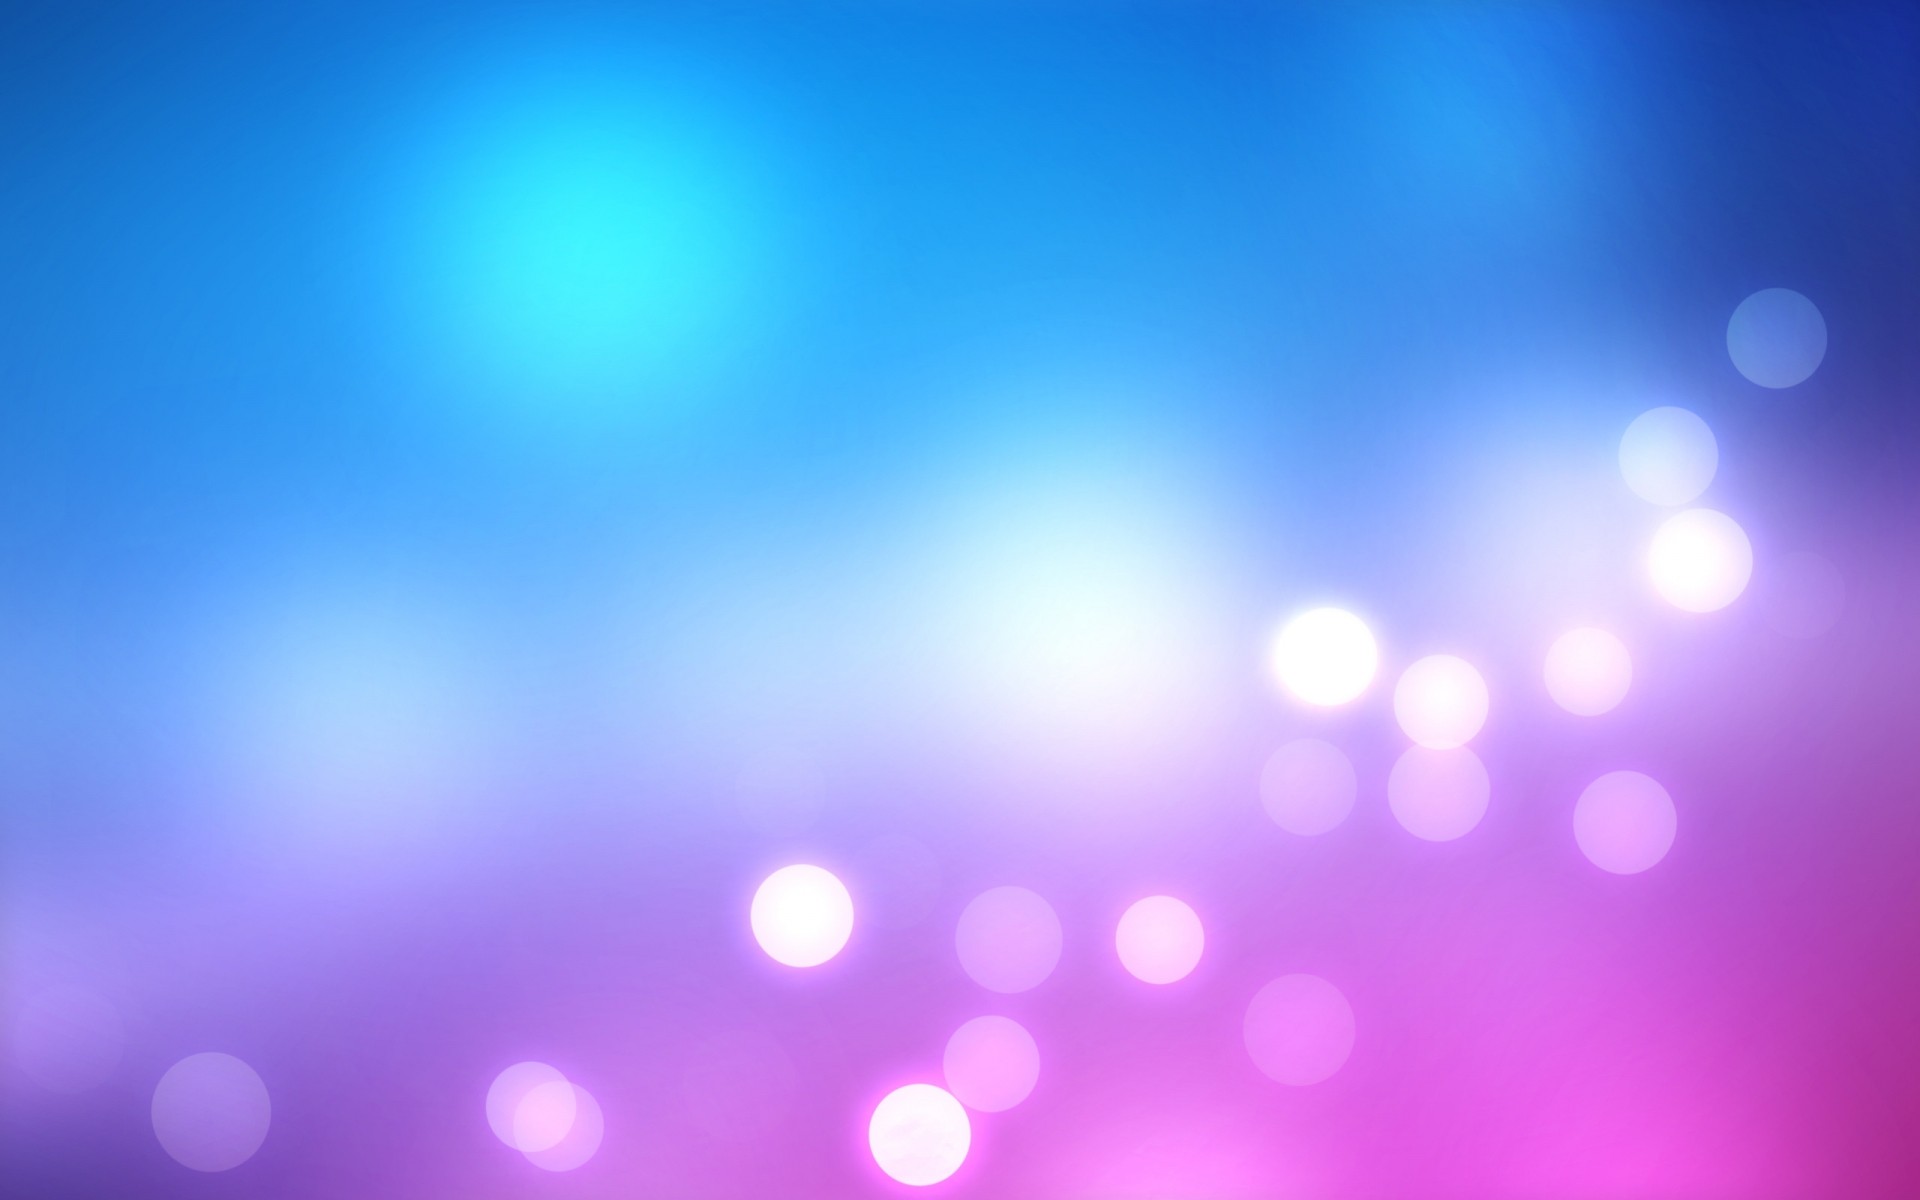 abstract blur light glisten shining christmas bright illuminated luminescence focus magic desktop color flash background graphic illustration design wallpaper round blue purple